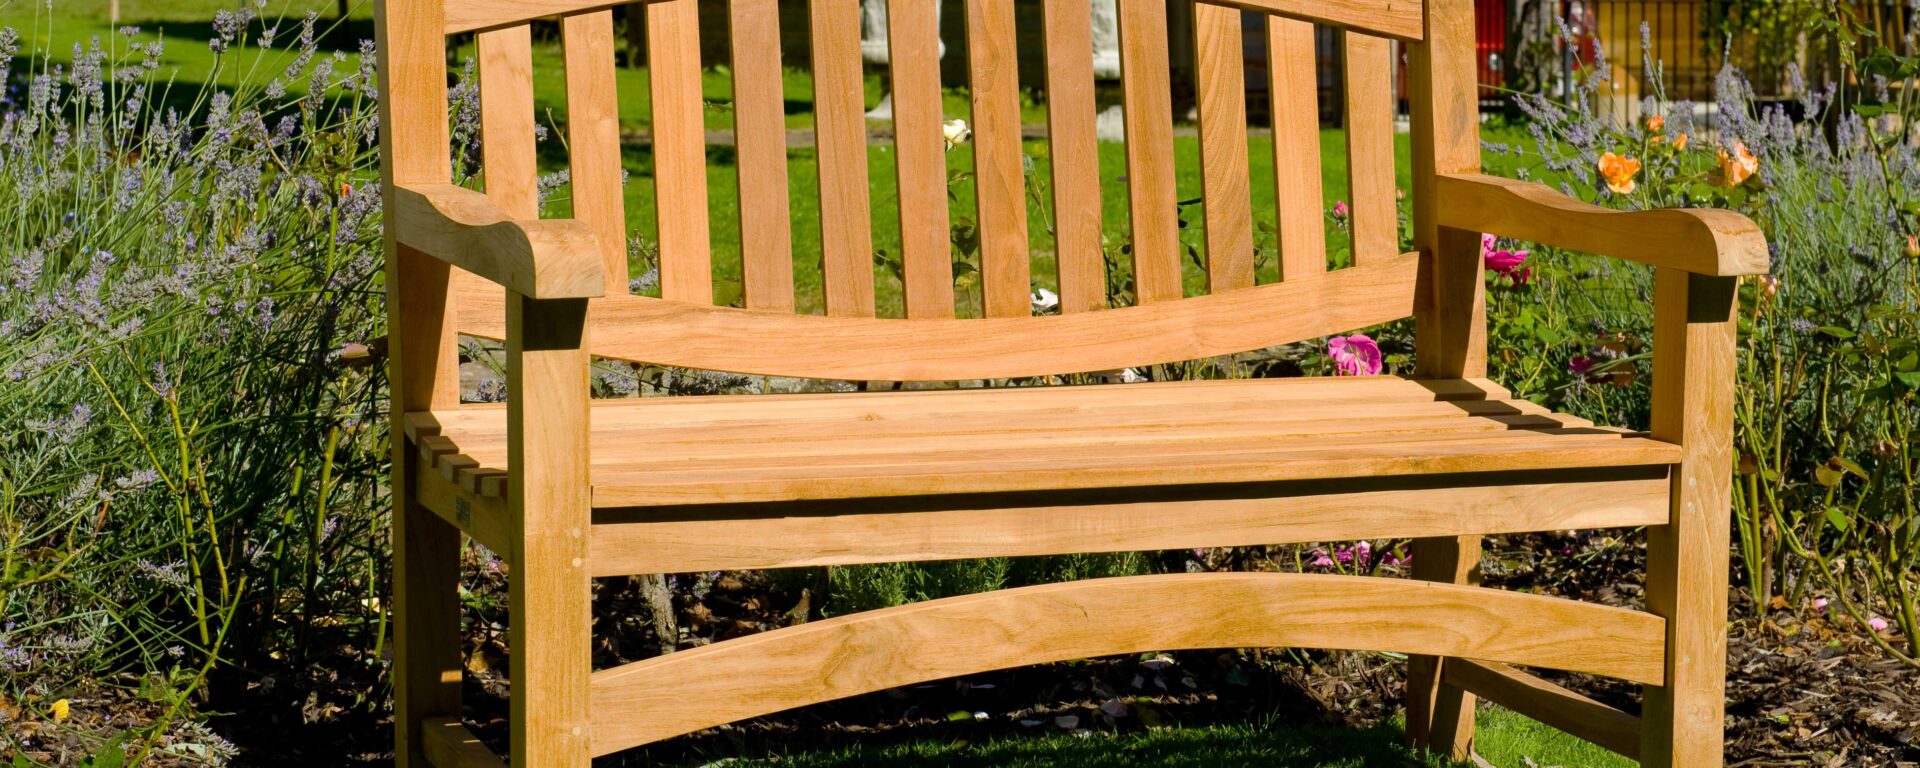 buy a garden bench from wealden benches